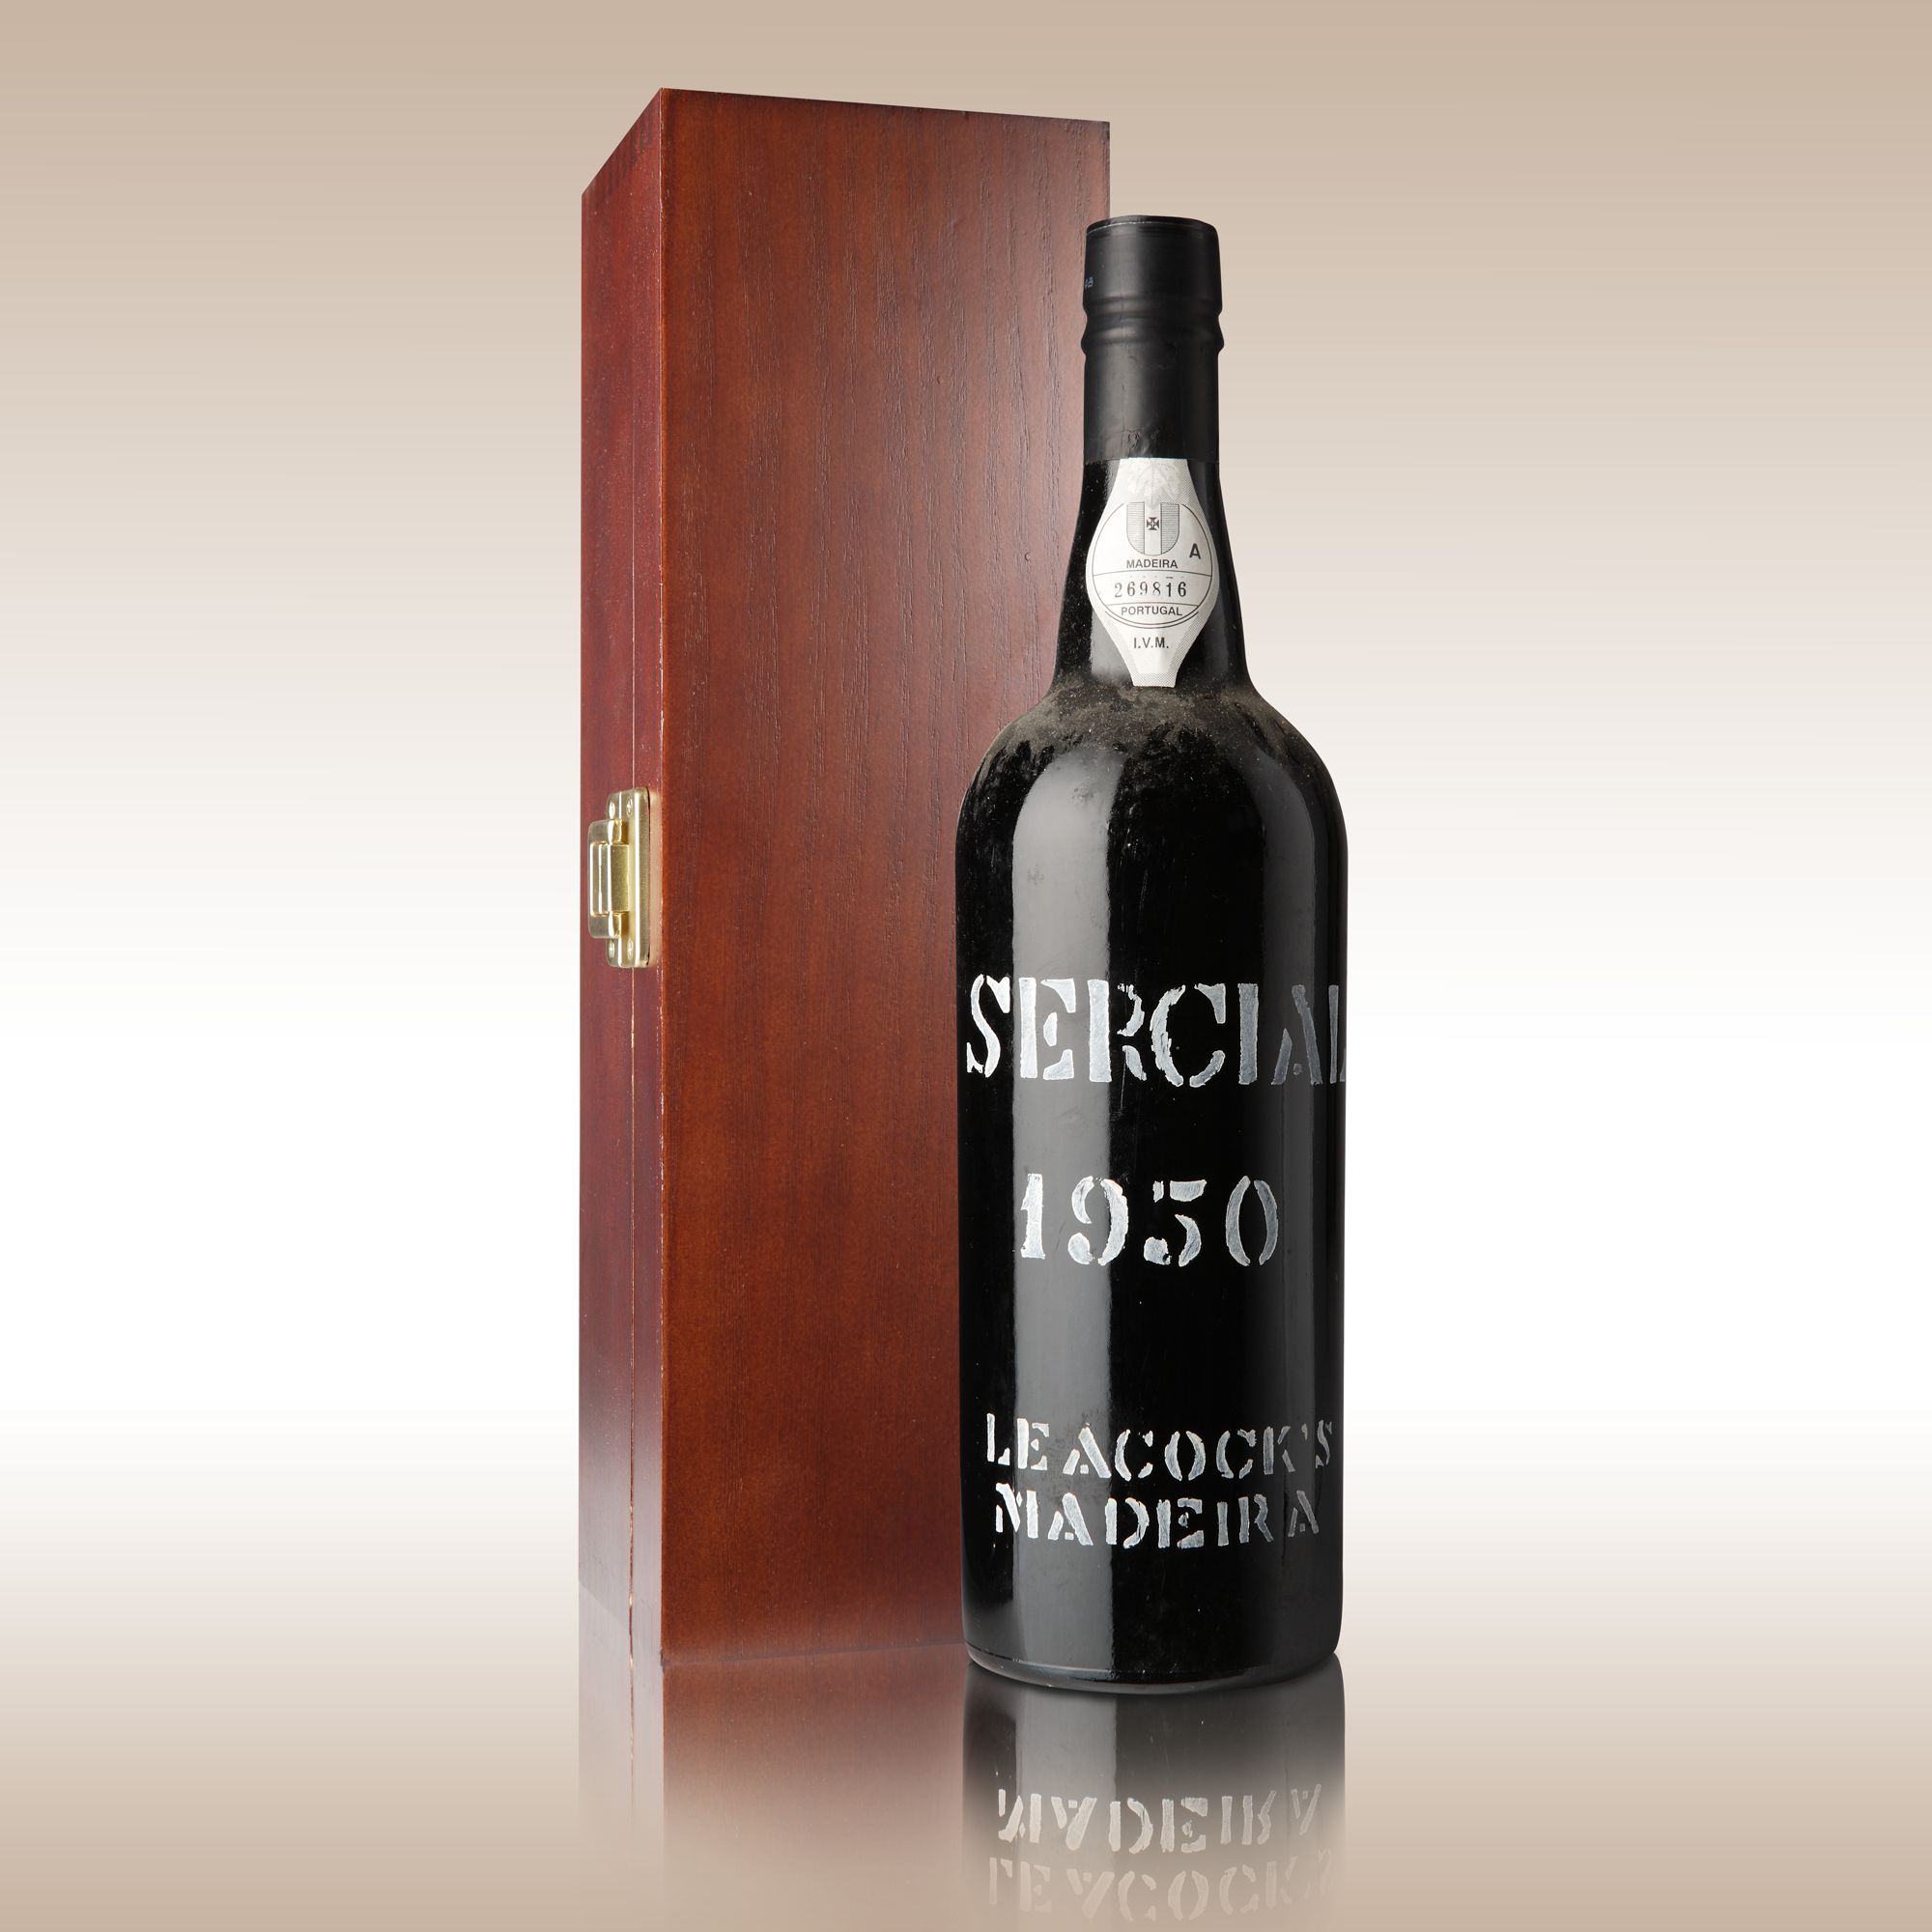 Leacock's 1950 Sercial Madeira Single Bottle Gift at John Lewis